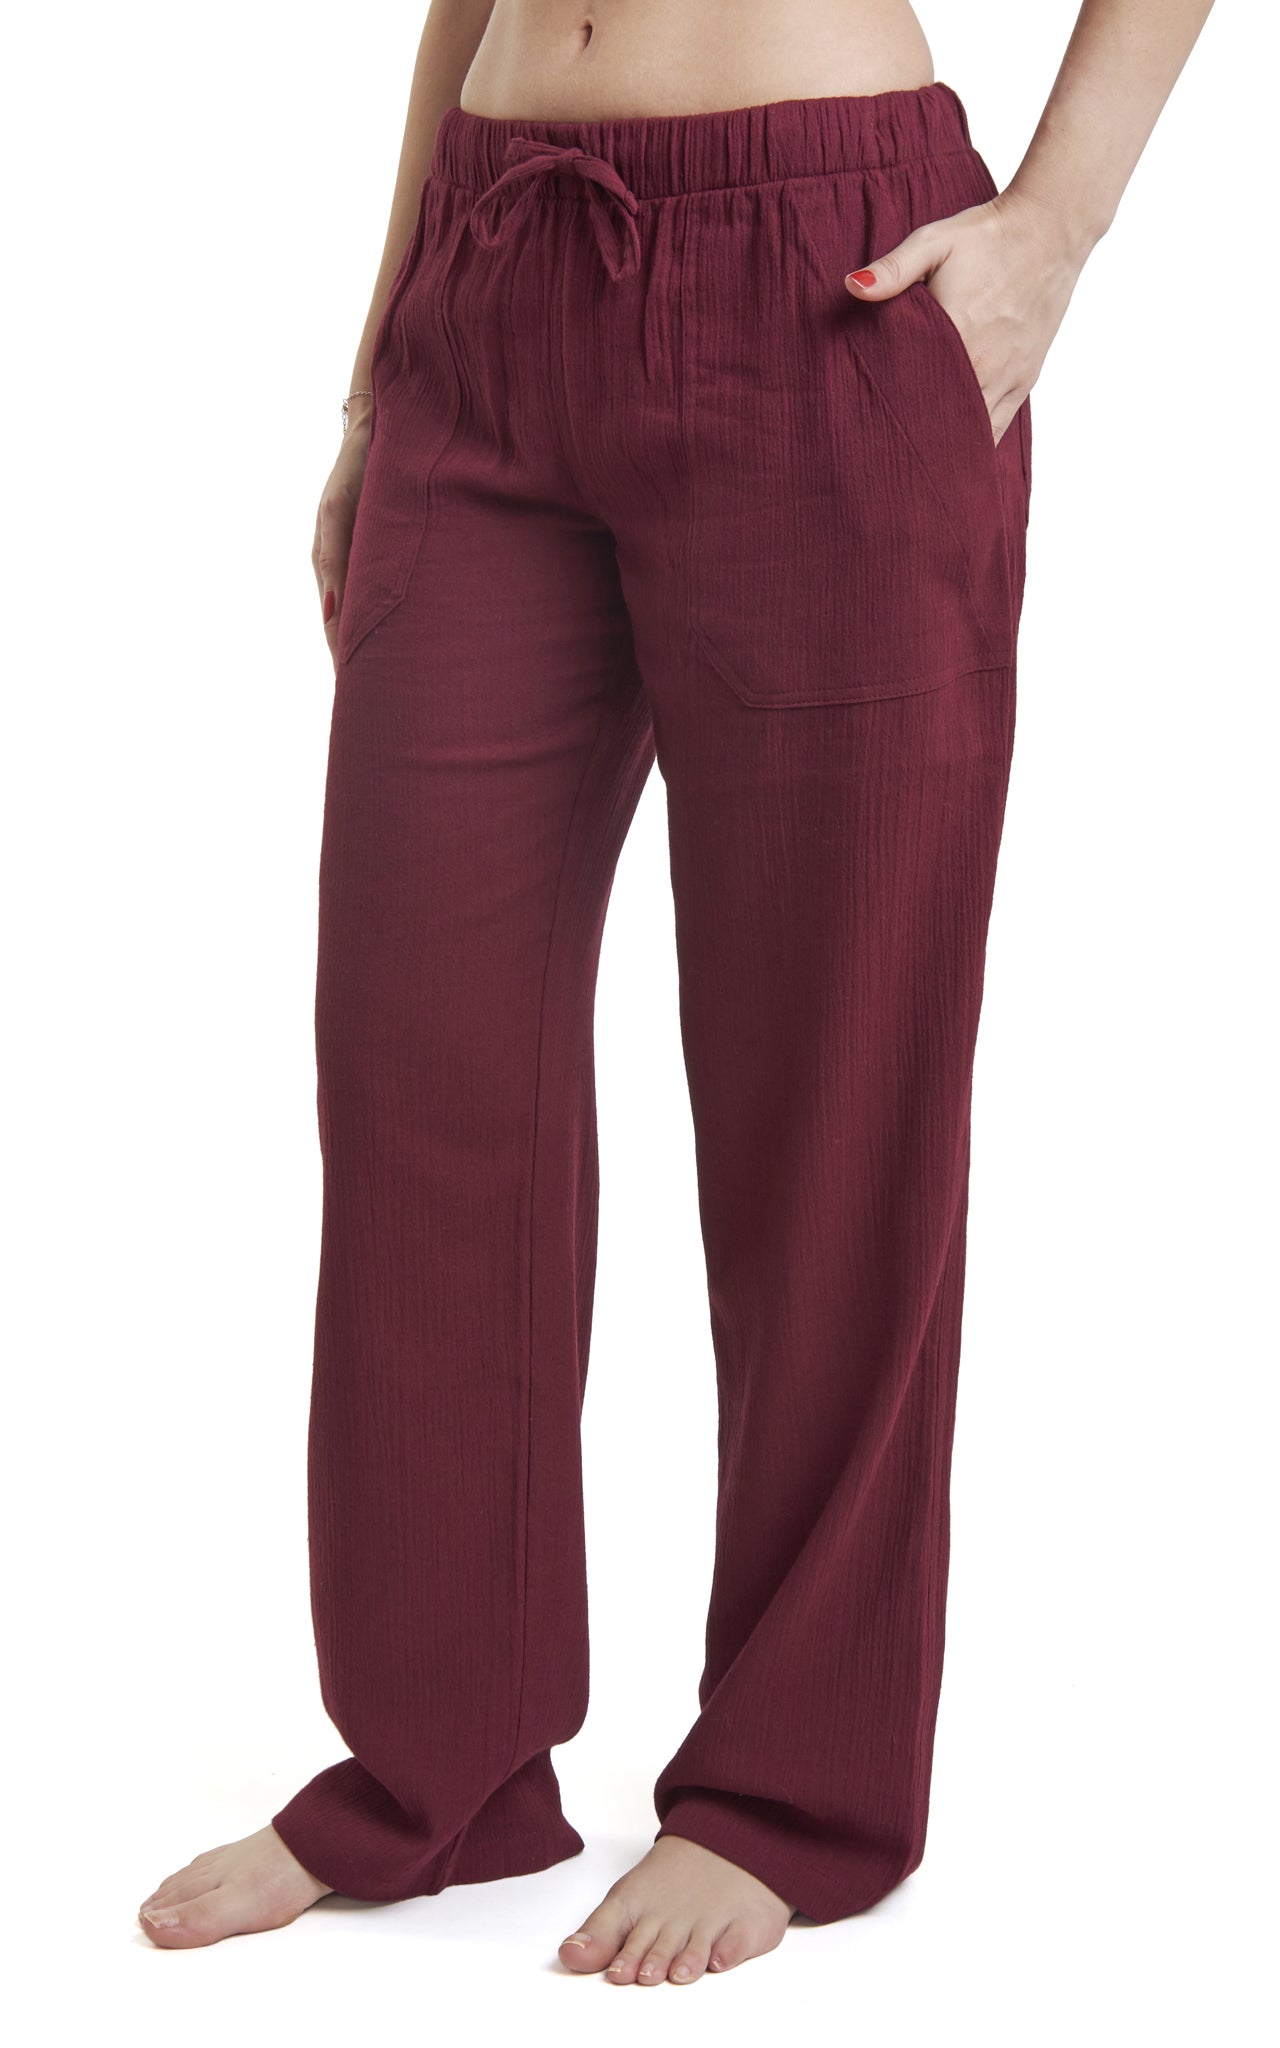 Women's Gauze Cotton PJ & Beach Pants with Pockets (Burgundy)